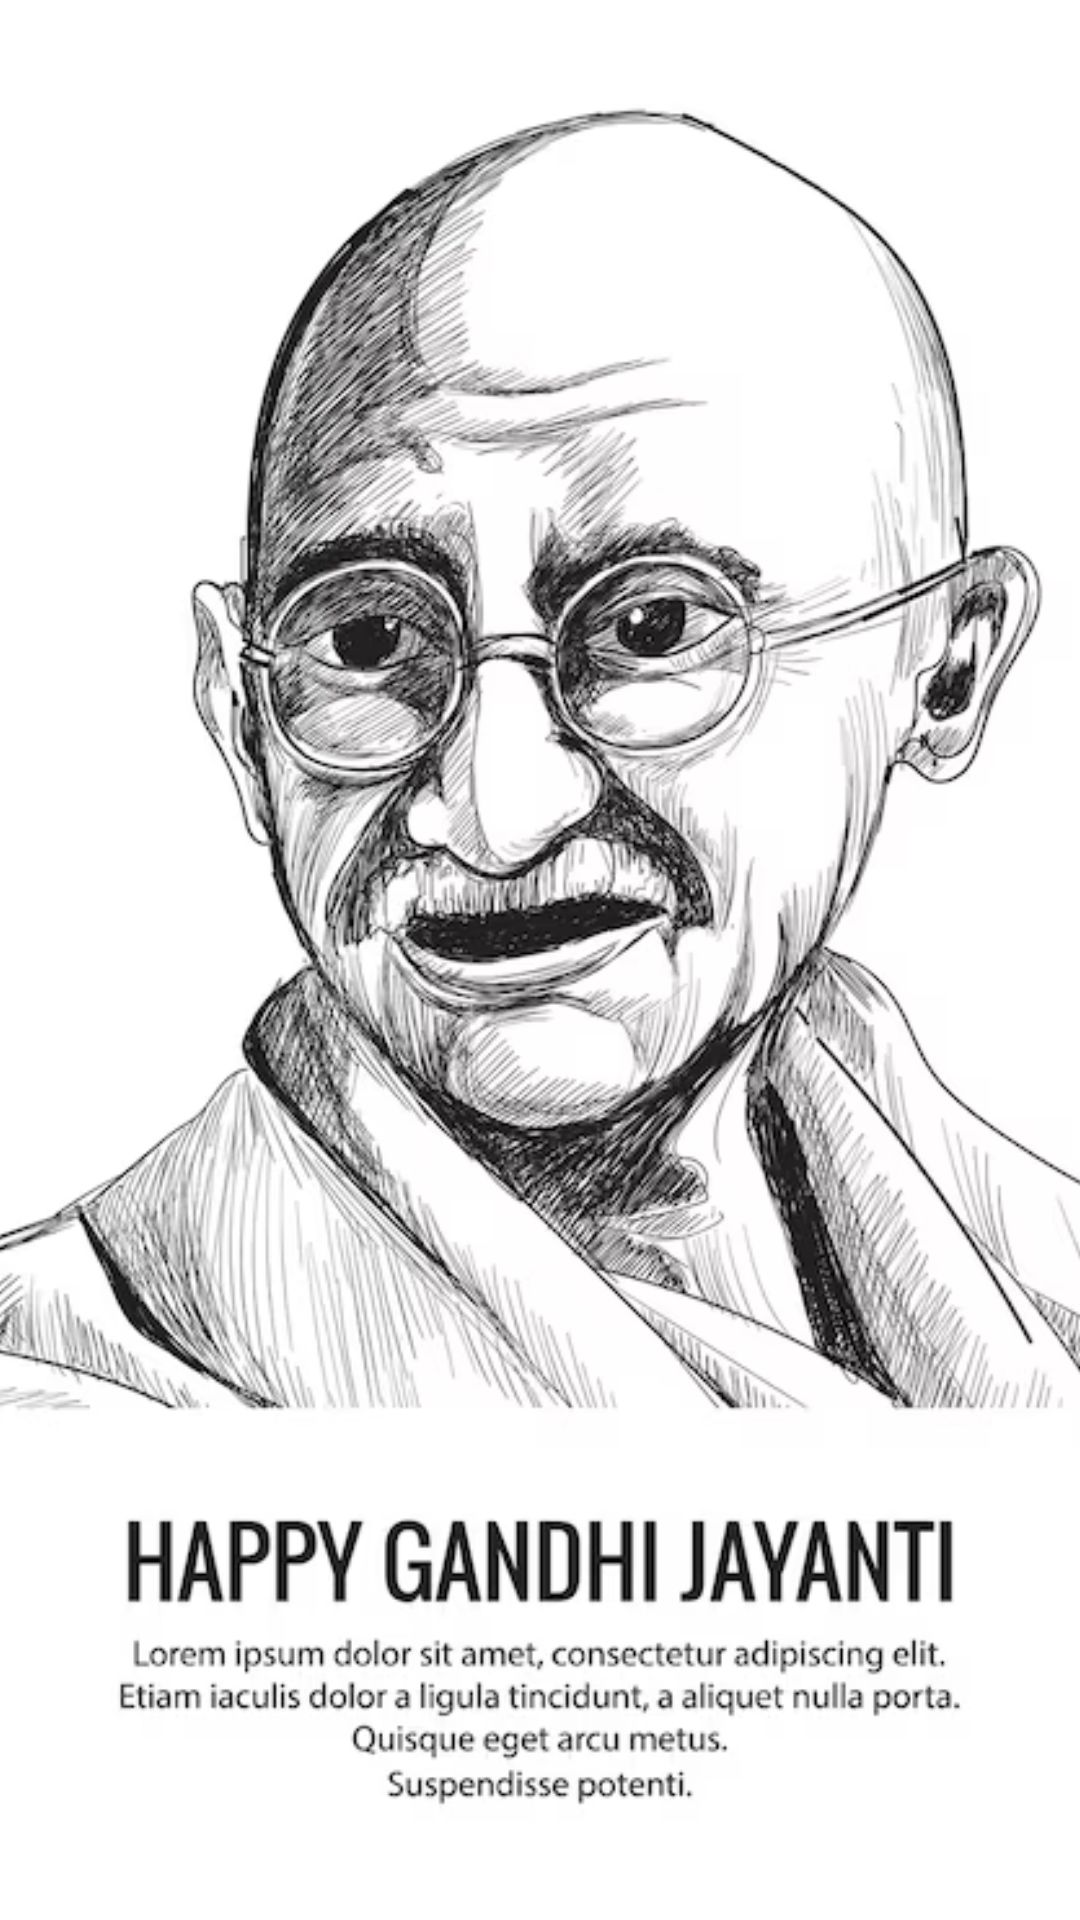 Famous books written on Mahatma Gandhi one should read